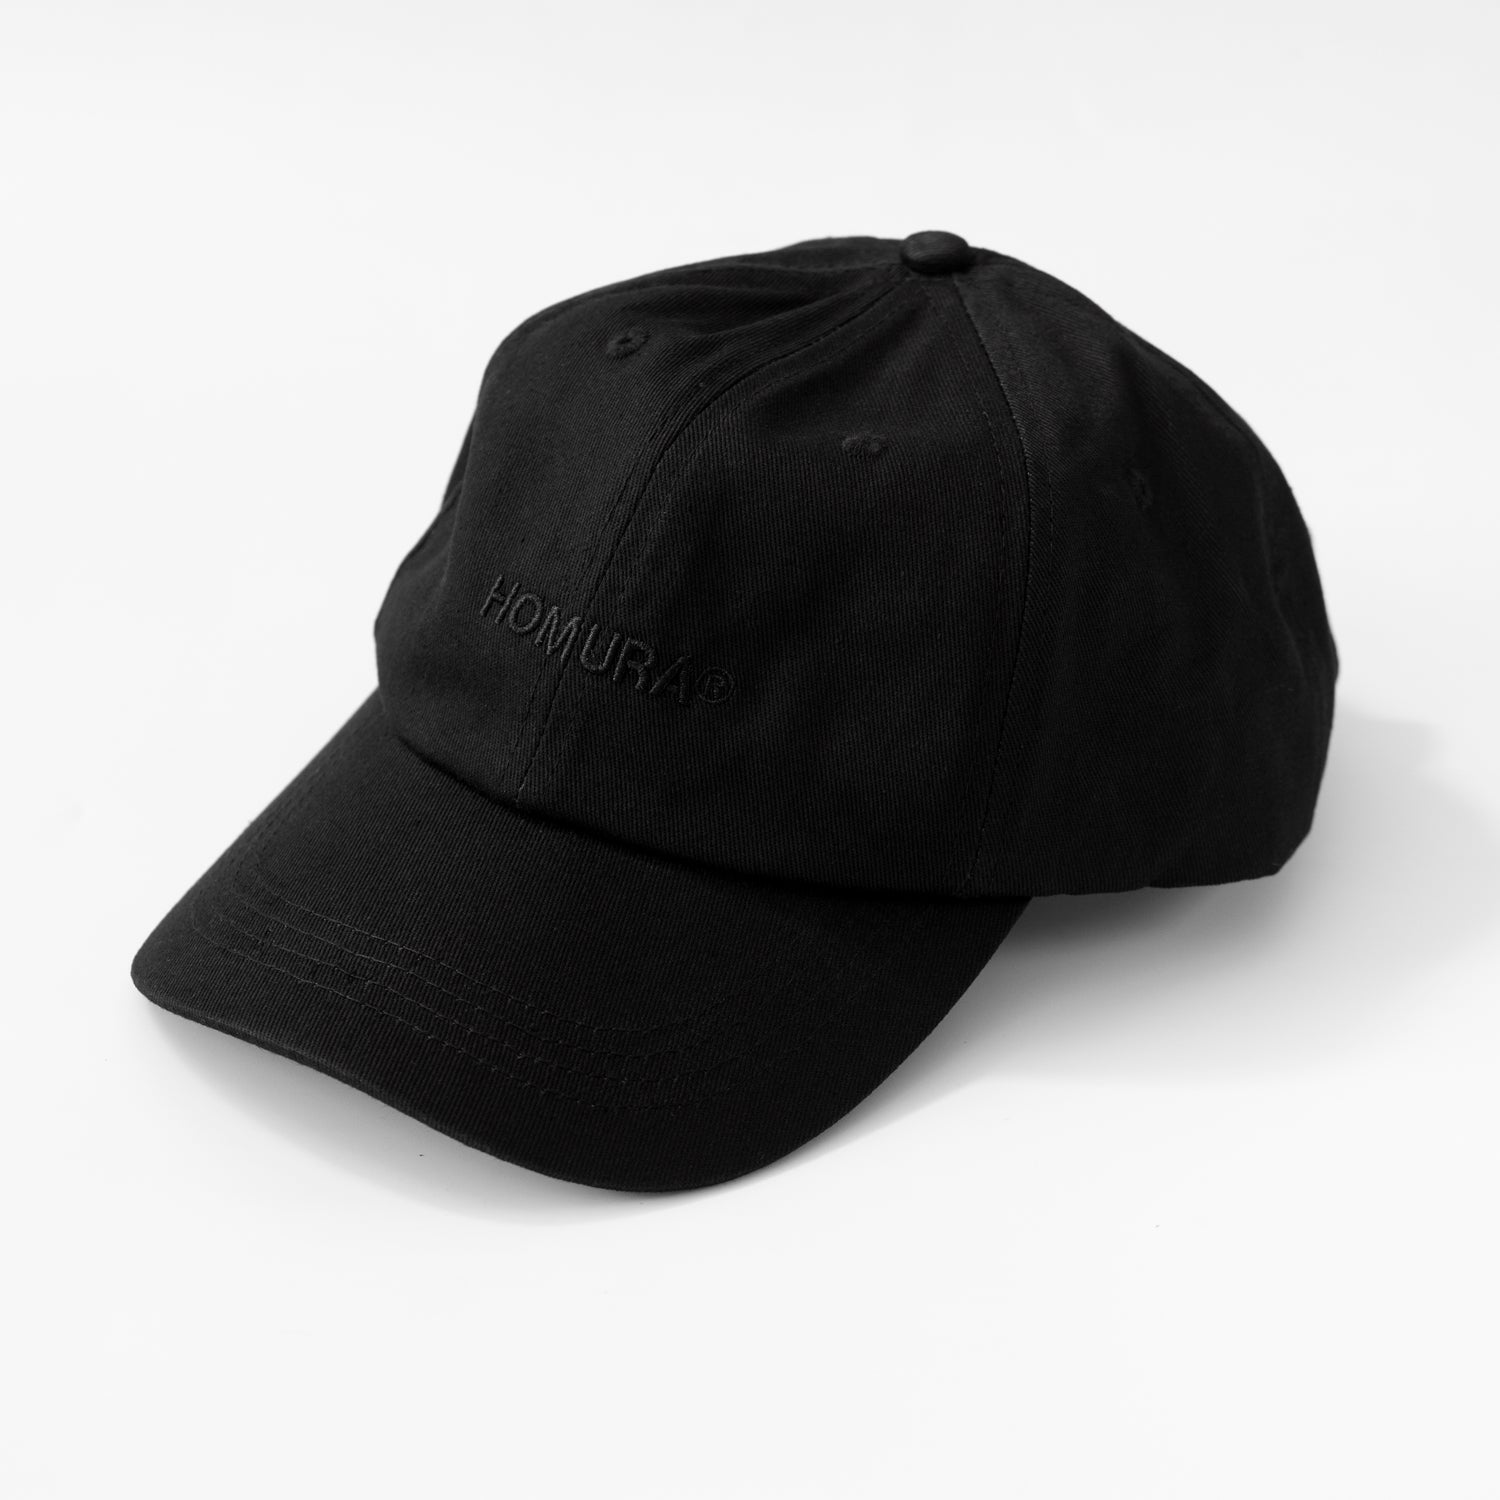 Homura® Baseball Cap, Coal Black